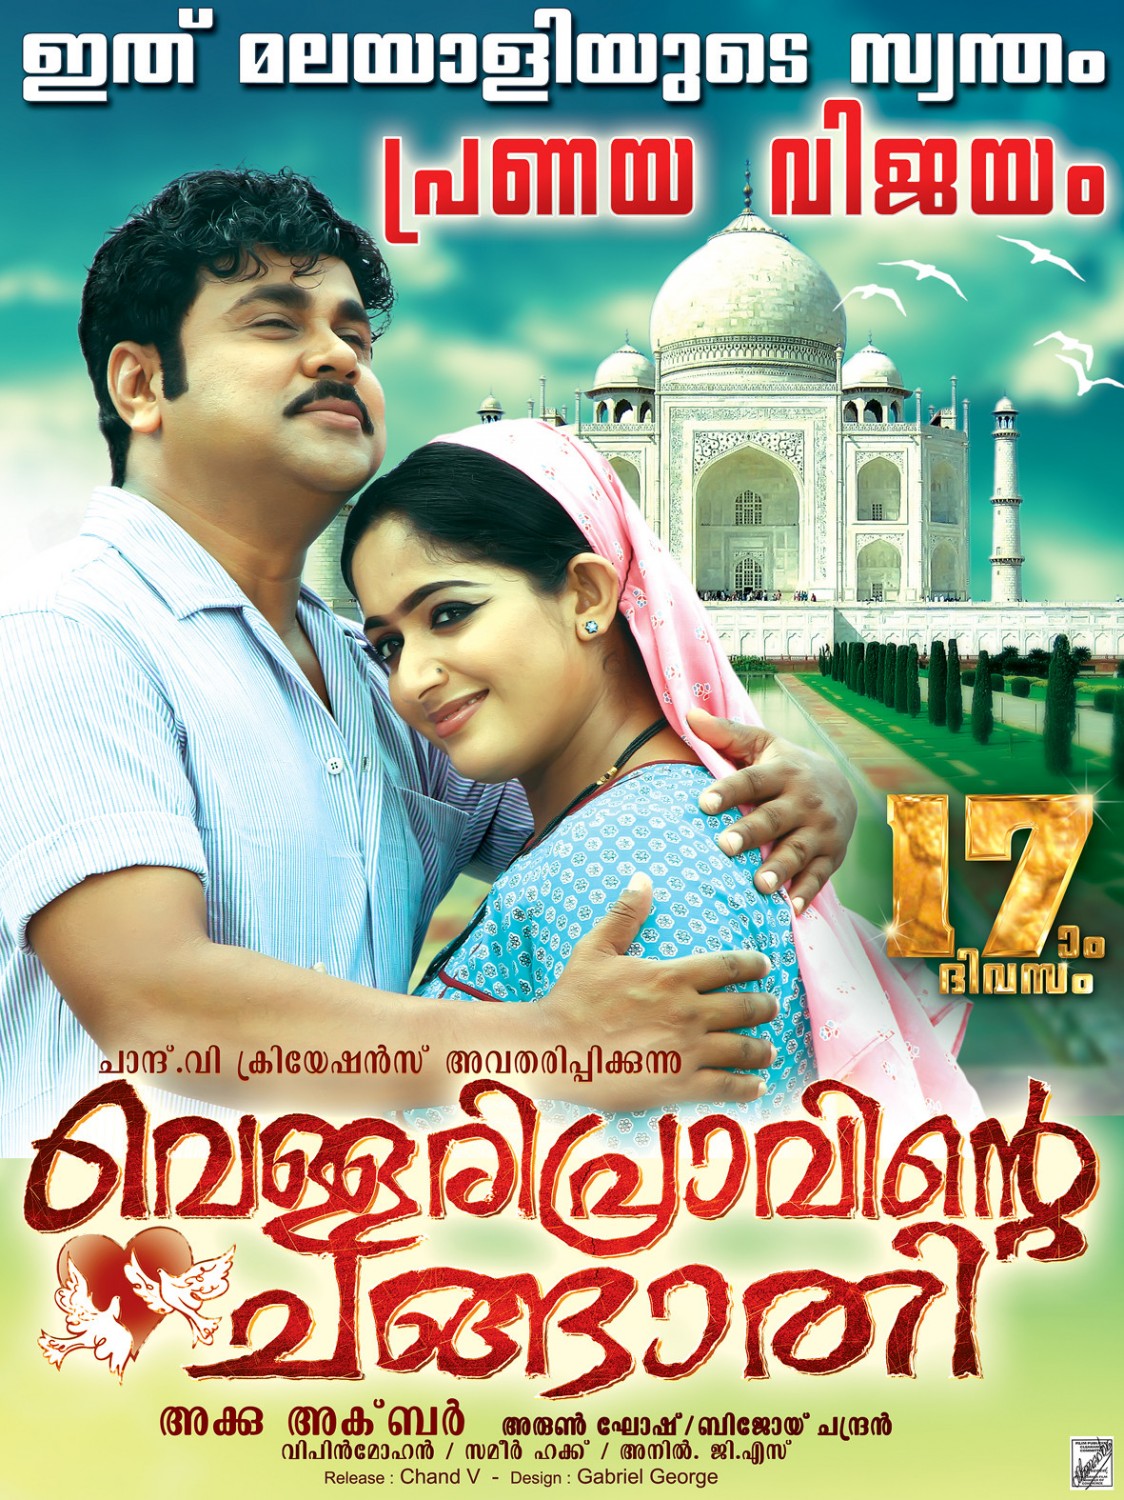 Extra Large Movie Poster Image for Vellaripravinte Changathi (#9 of 9)